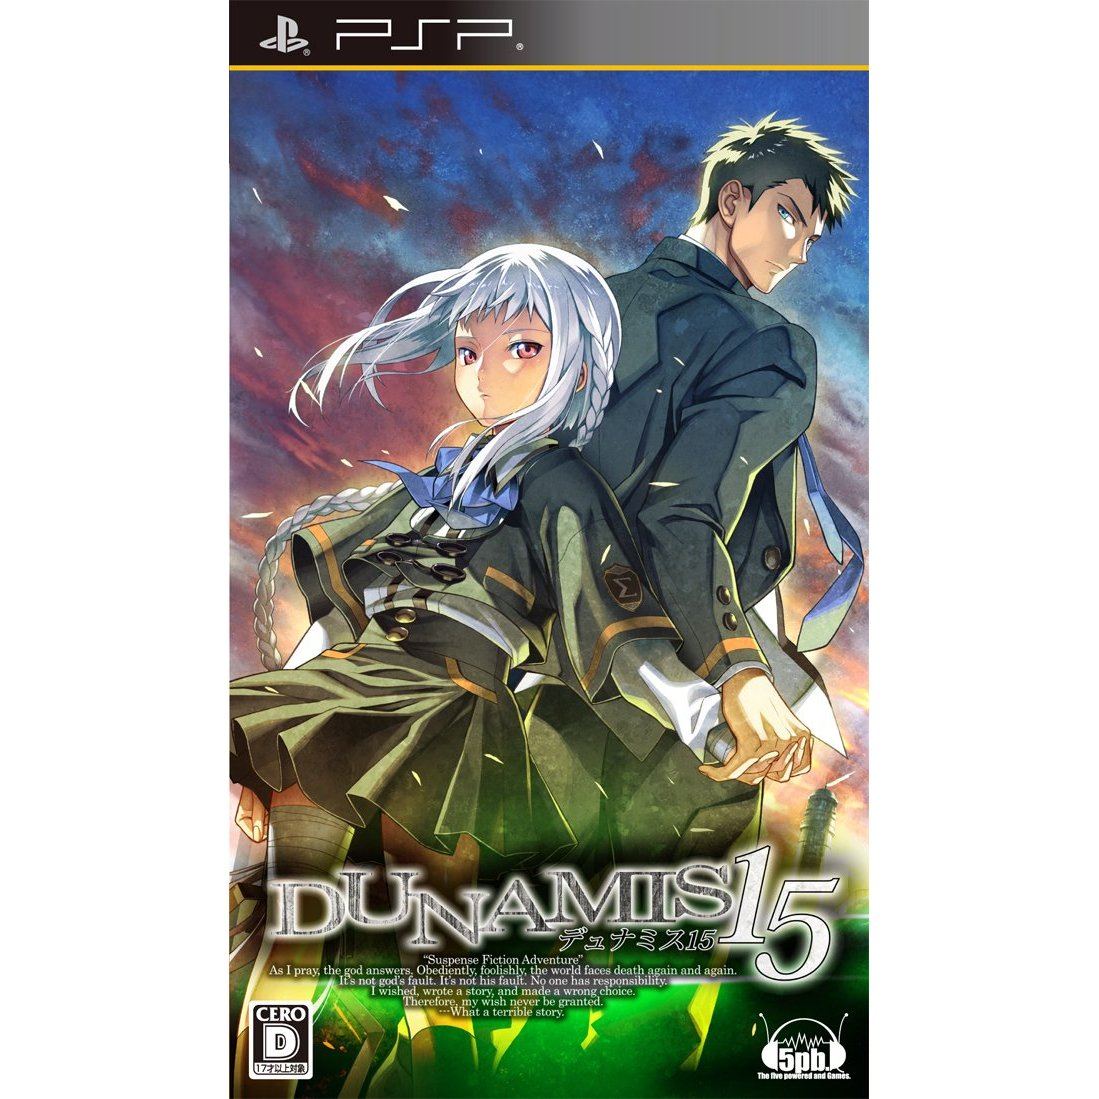 Dunamis 15 [Regular Edition] for Sony PSP